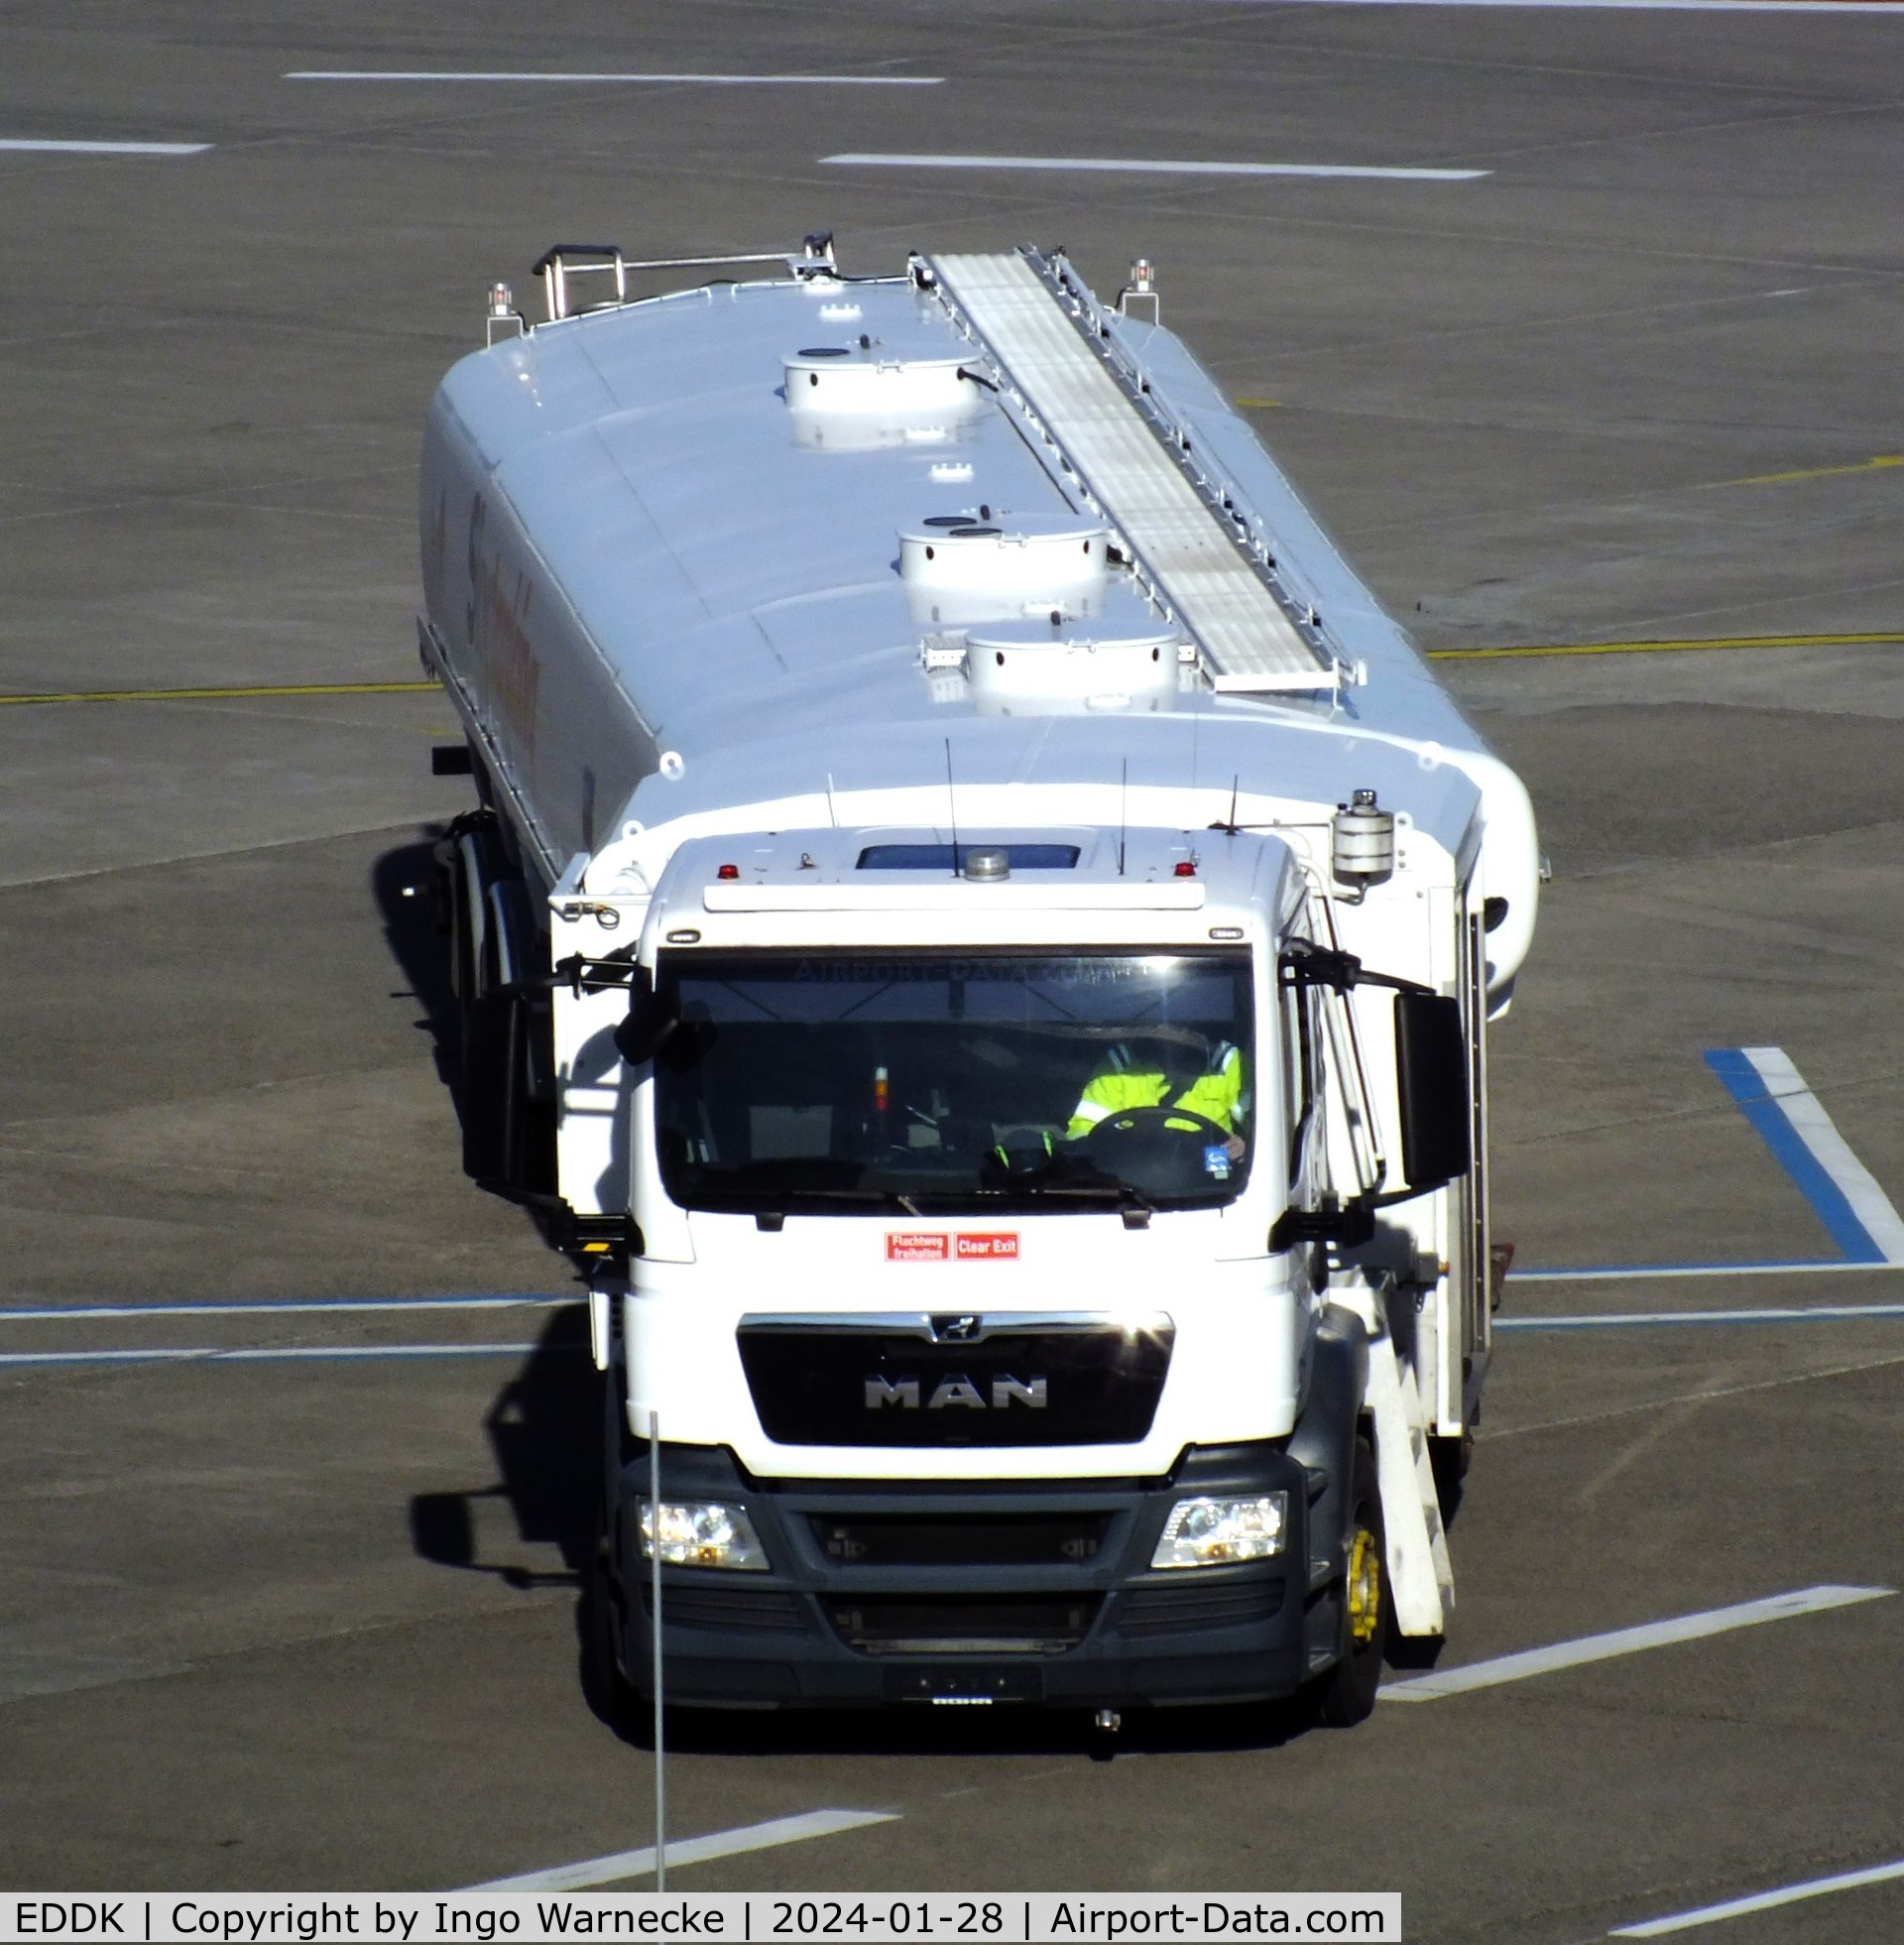 Cologne Bonn Airport, Cologne/Bonn Germany (EDDK) - airport fuel truck at Köln/Bonn airport